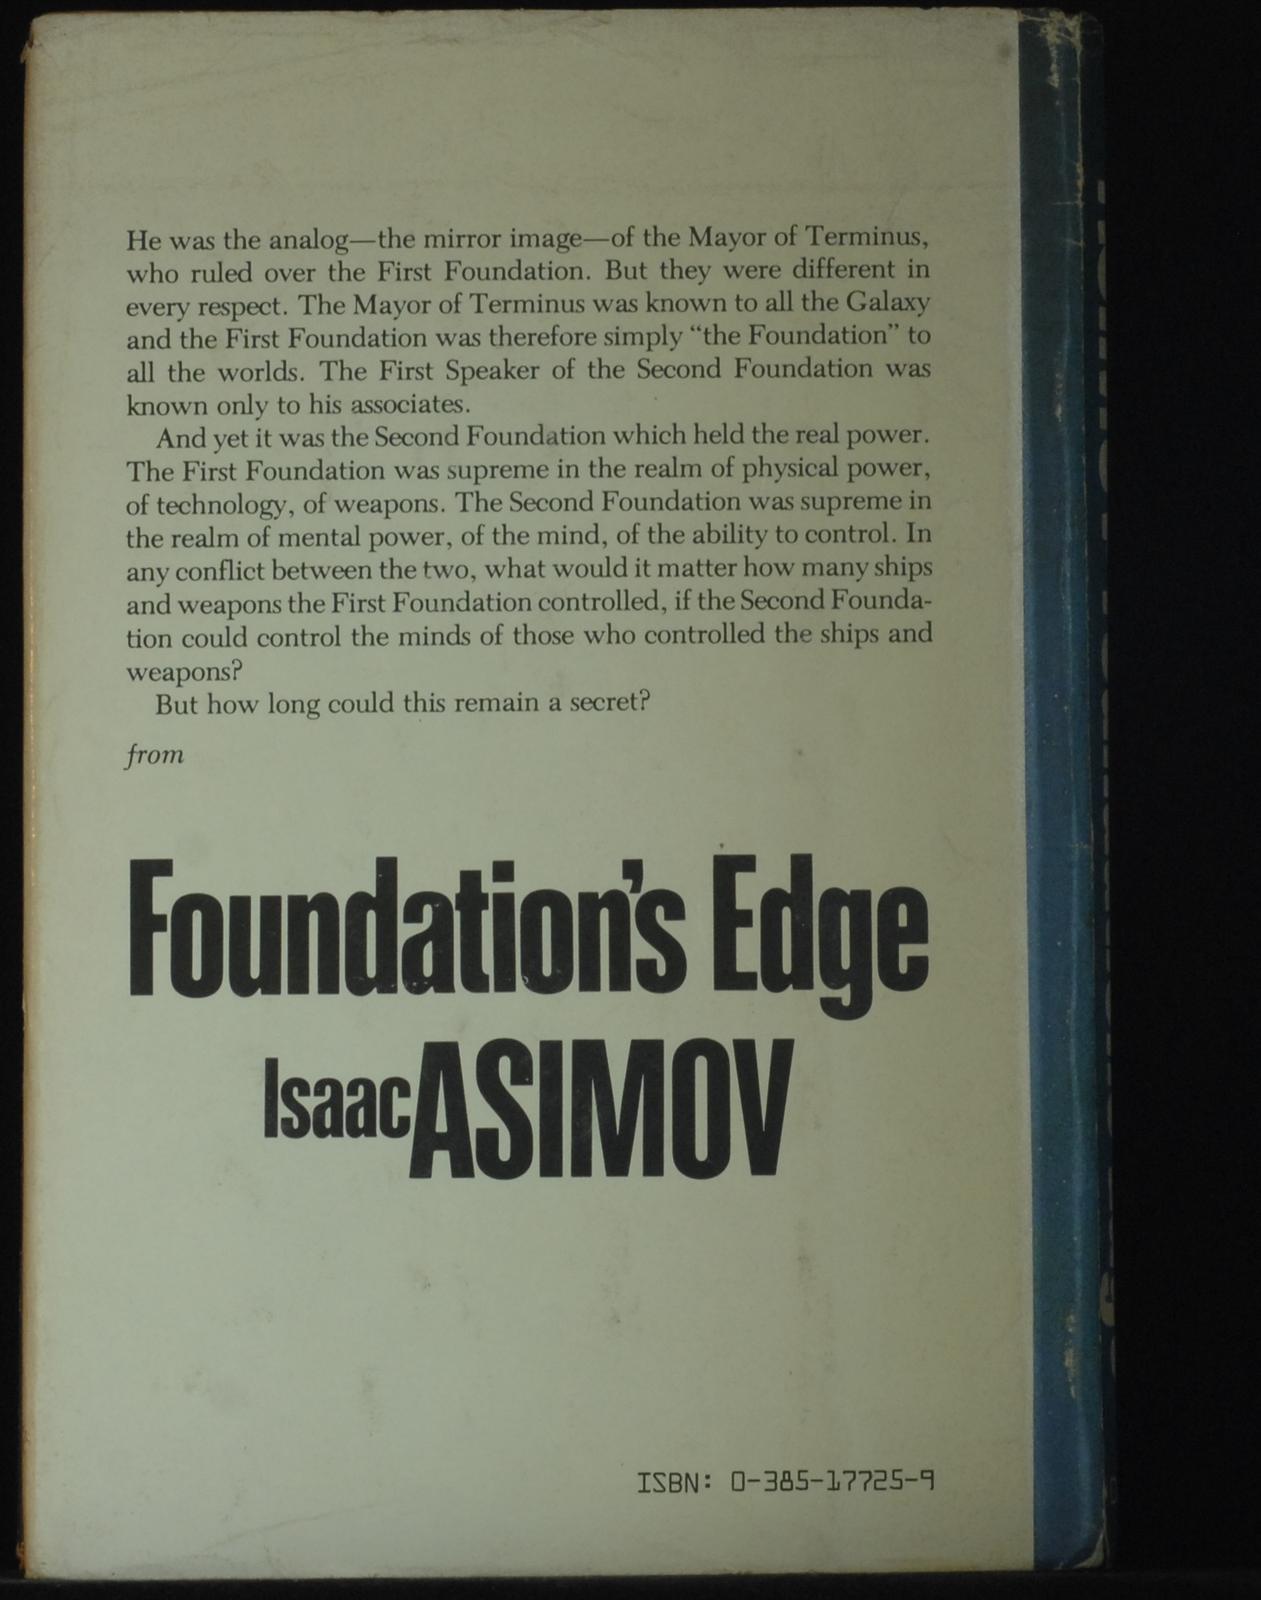 mbb006643b_-_Asimov_Isaac_-_Foundation_s_Edge.jpg